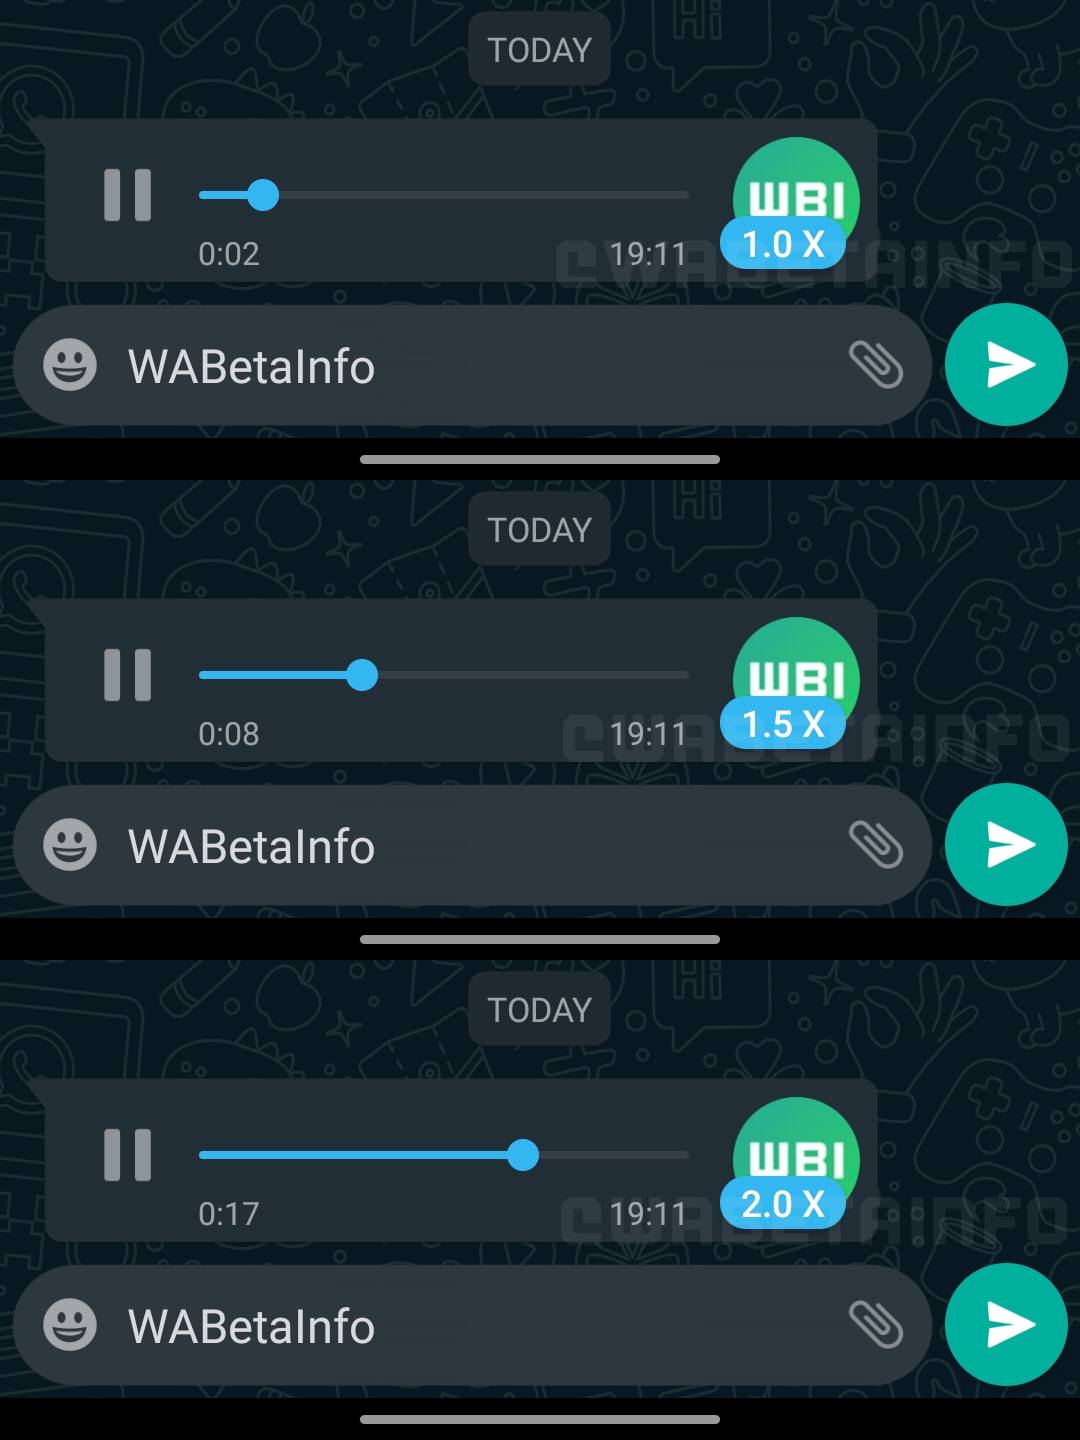 WhatsApp speed voice messages